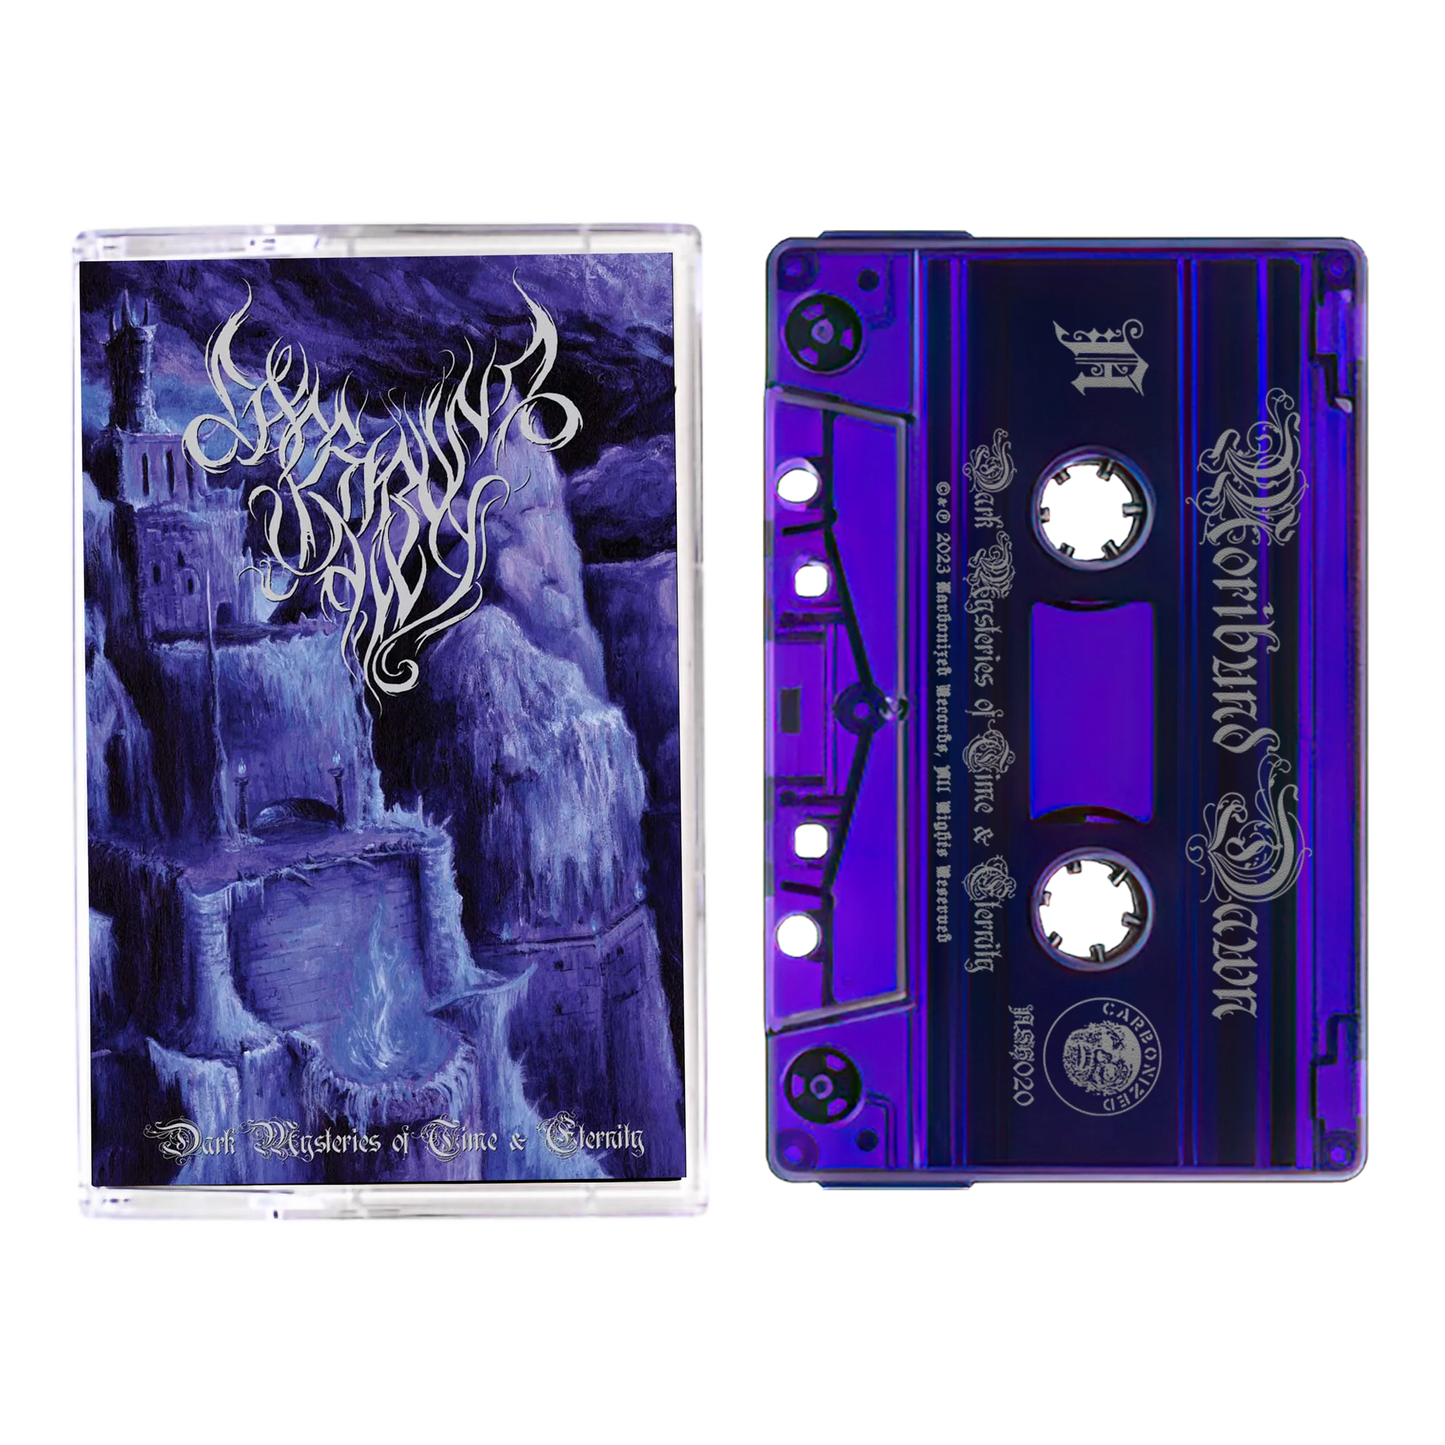 Moribund Dawn - Dark Mysteries of Time & Eternity cassette tape